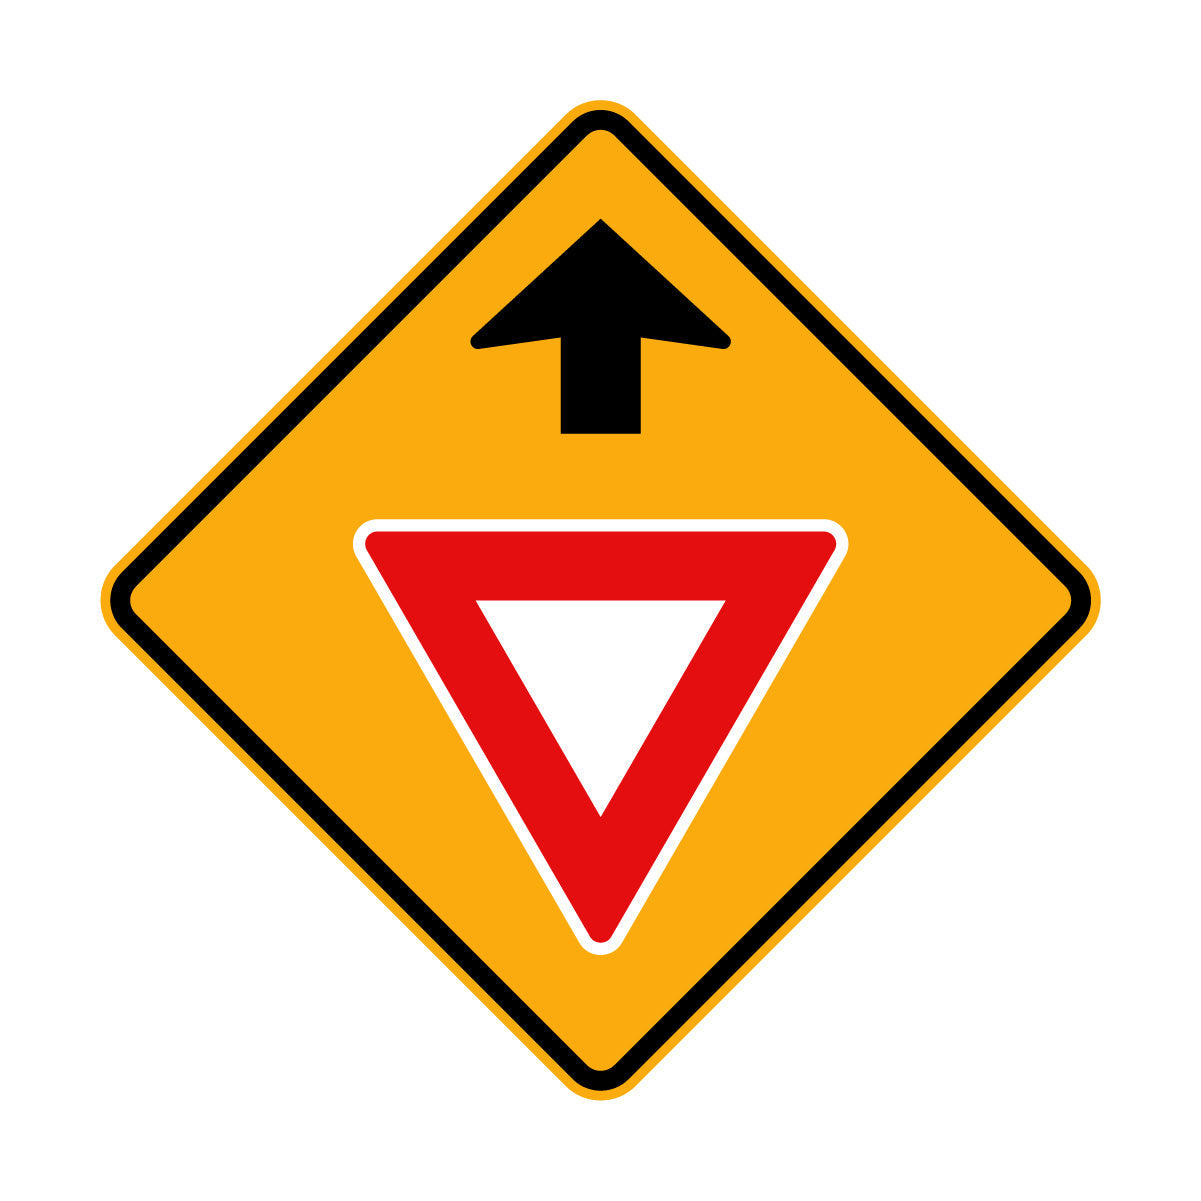 Warning: Give Way Ahead Sign